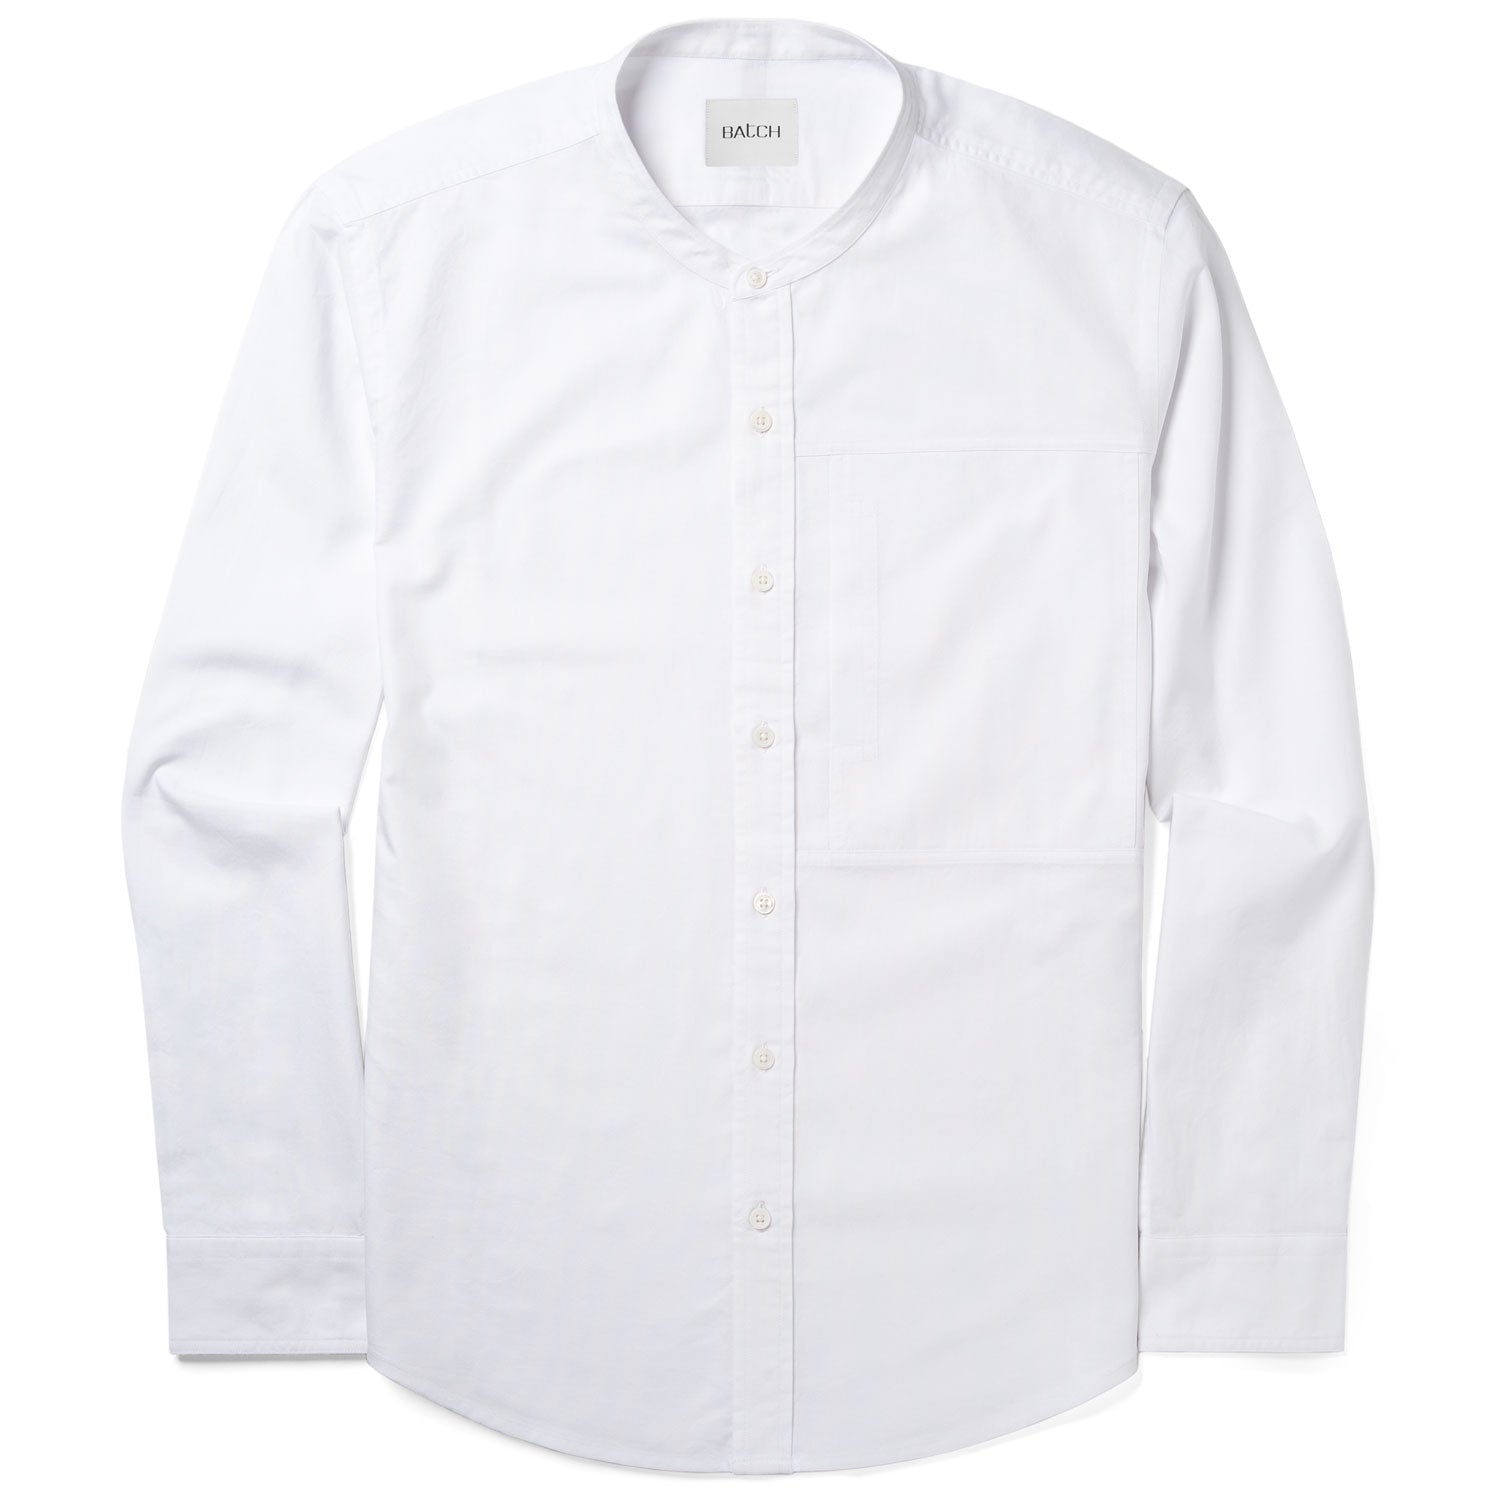 Architect Band-Collar One Pocket Shirt - Pure White Oxford